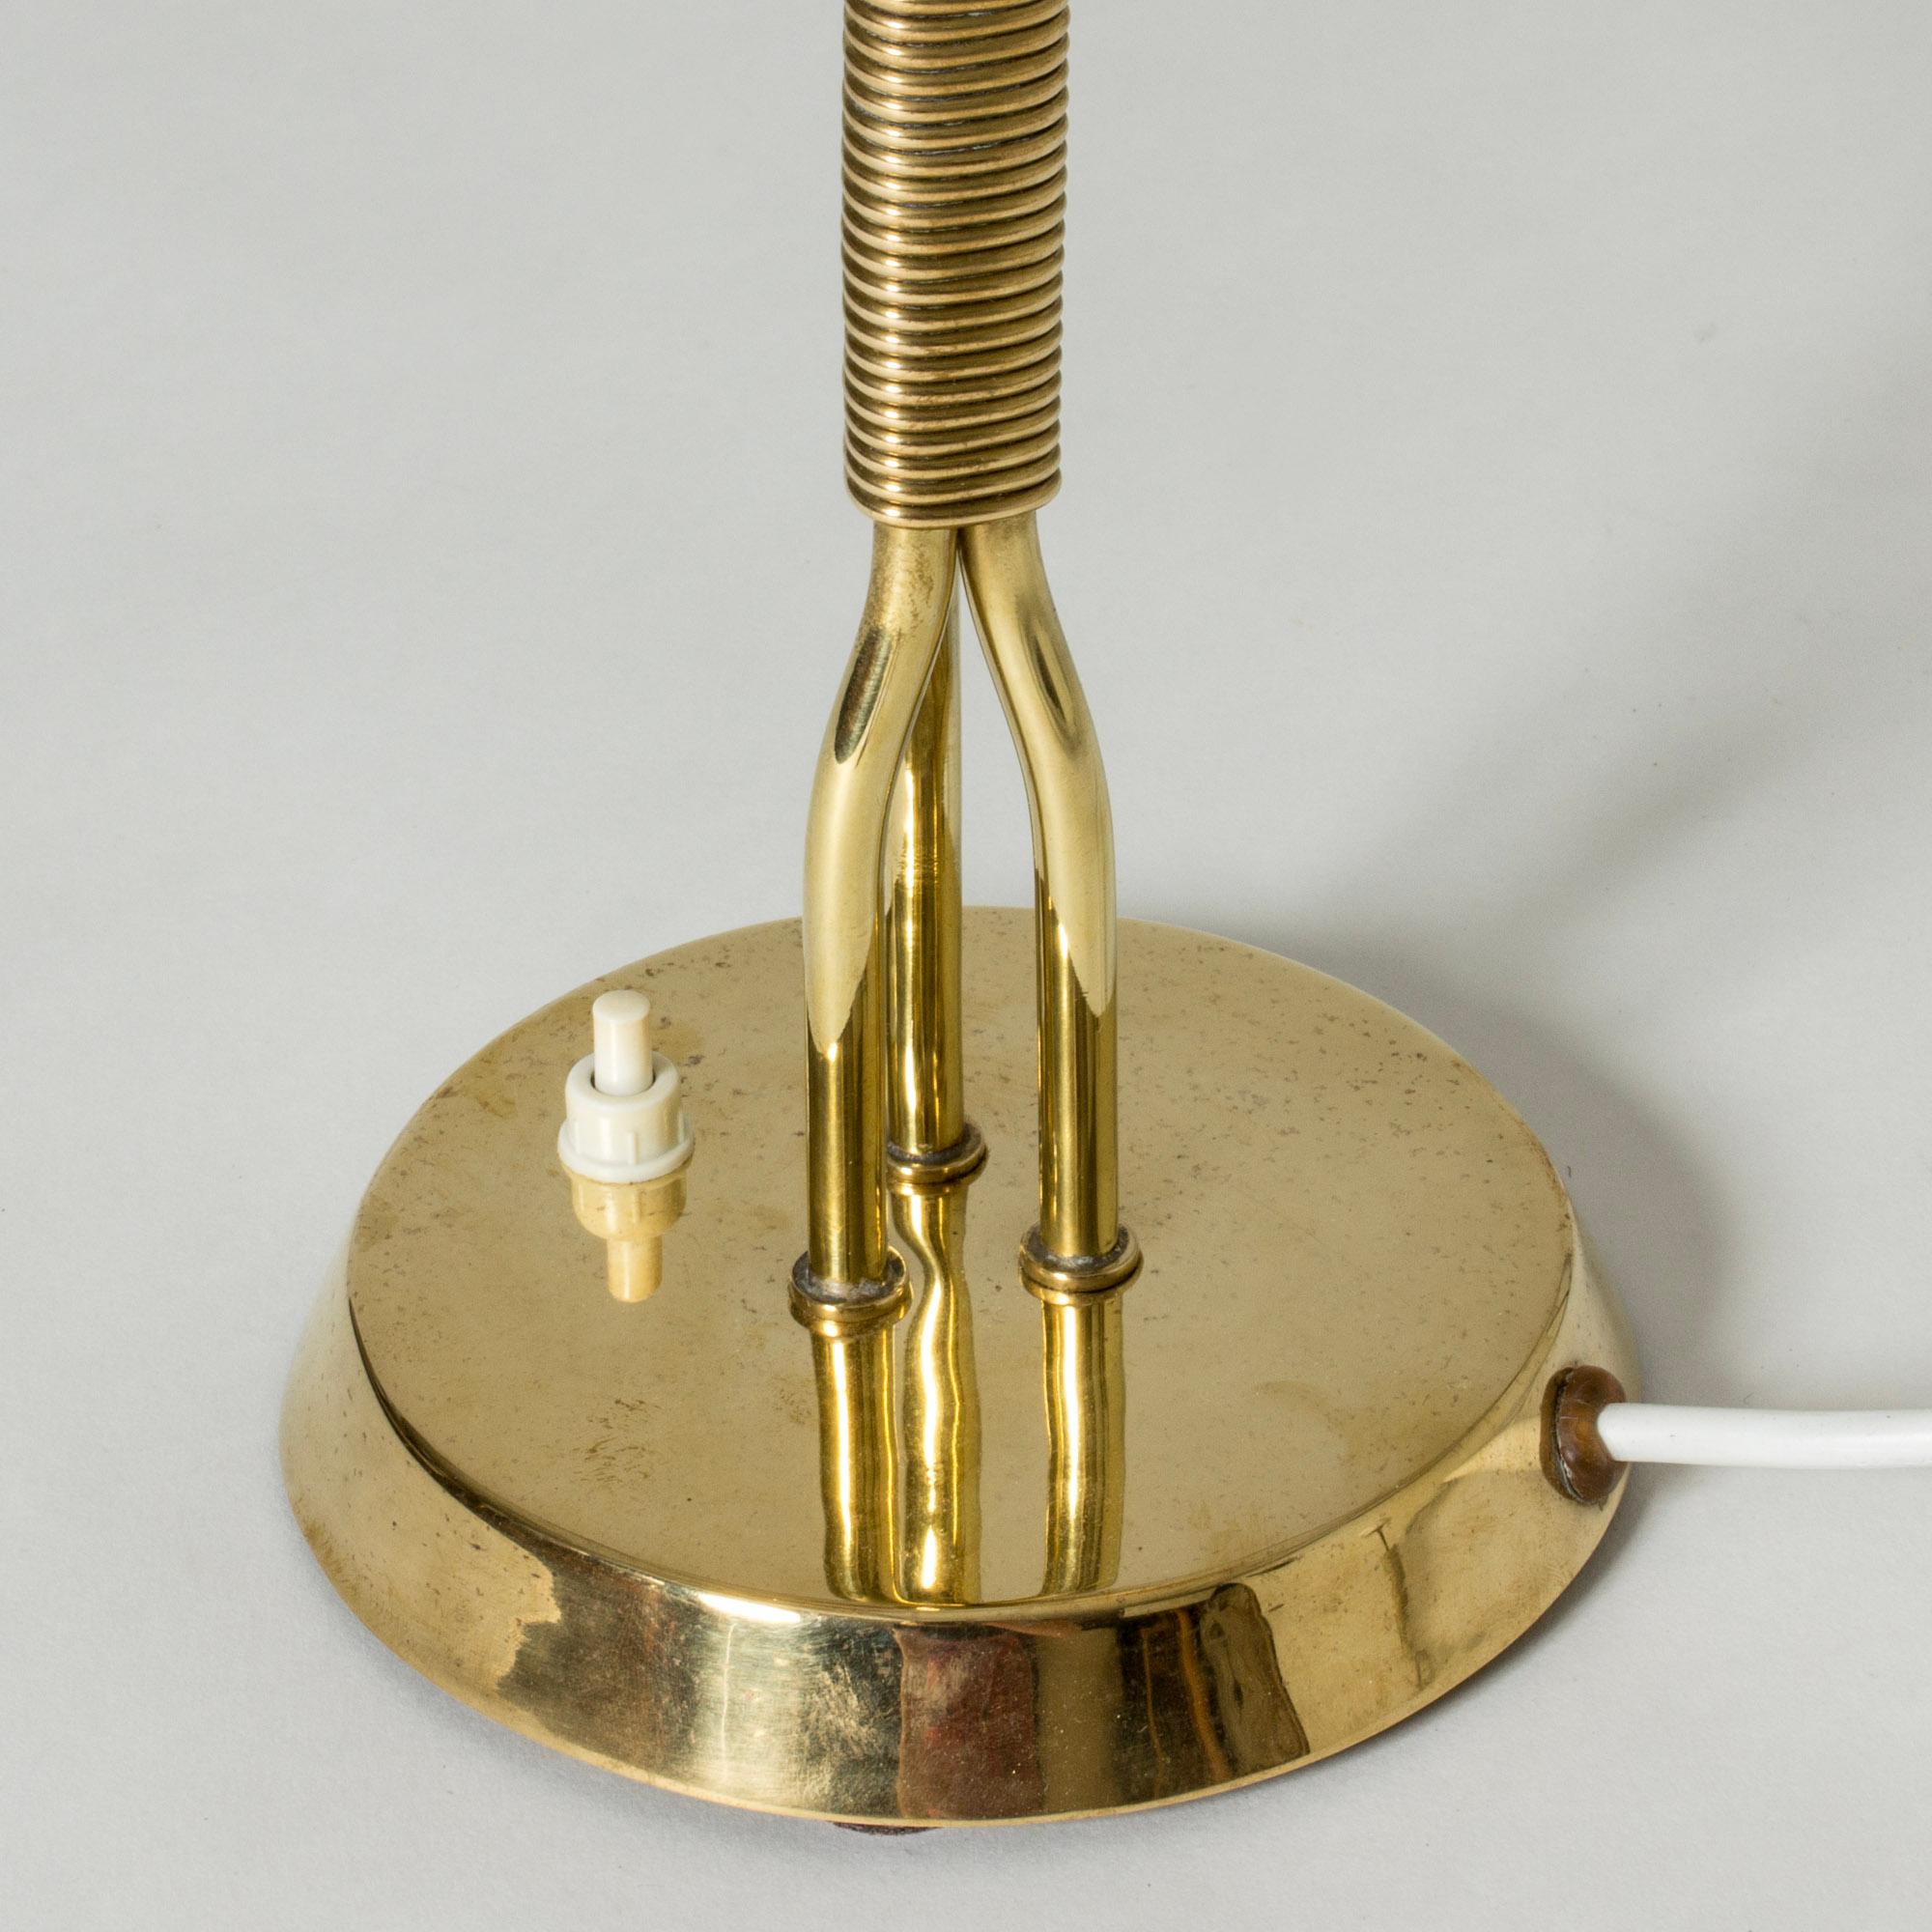 Brass Scandinavian Modern Table Lamp, Hans Bergström, Ateljé Lyktan, Sweden, 1940s For Sale